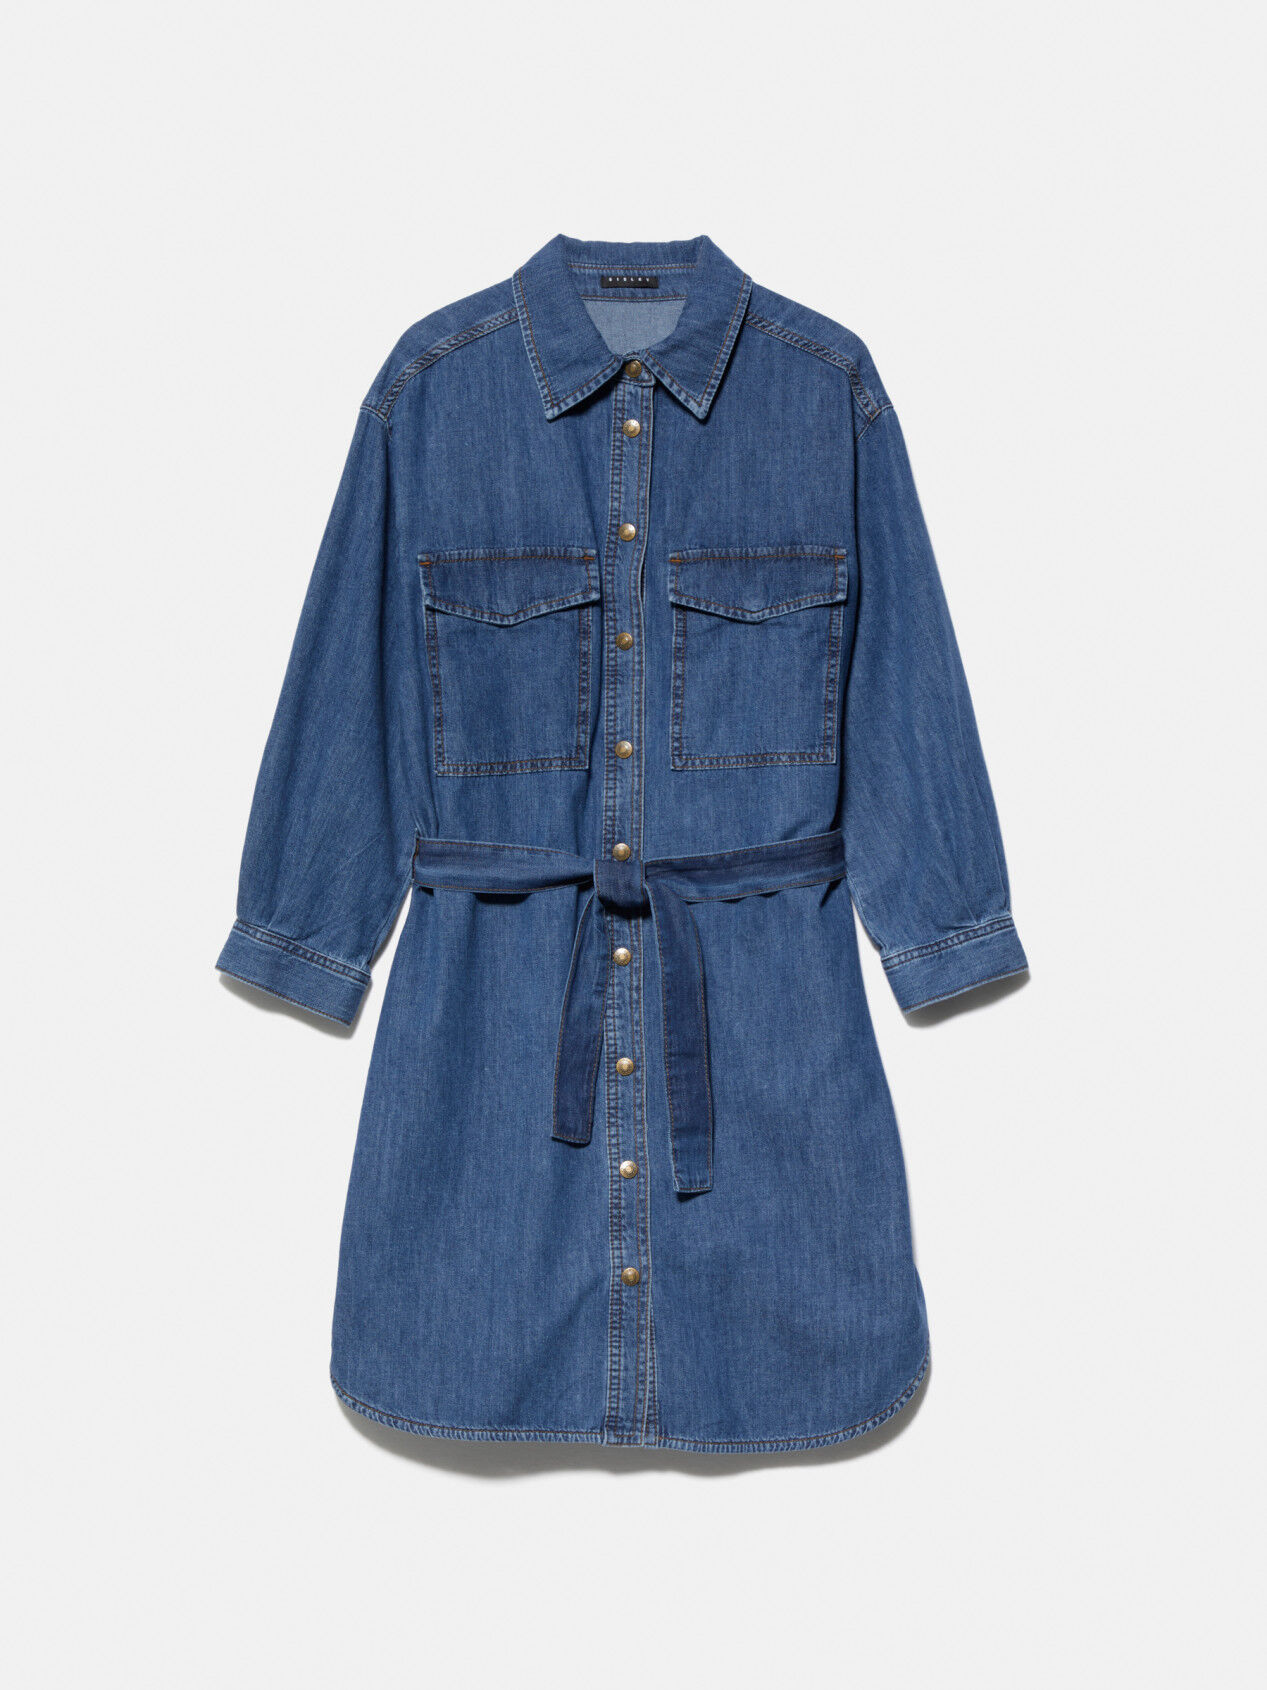 Women's Vintage Denim Dress Casual Short Sleeve Button Down Lapel Swing  Midi Jeans Dress With Pockets | Fruugo NO